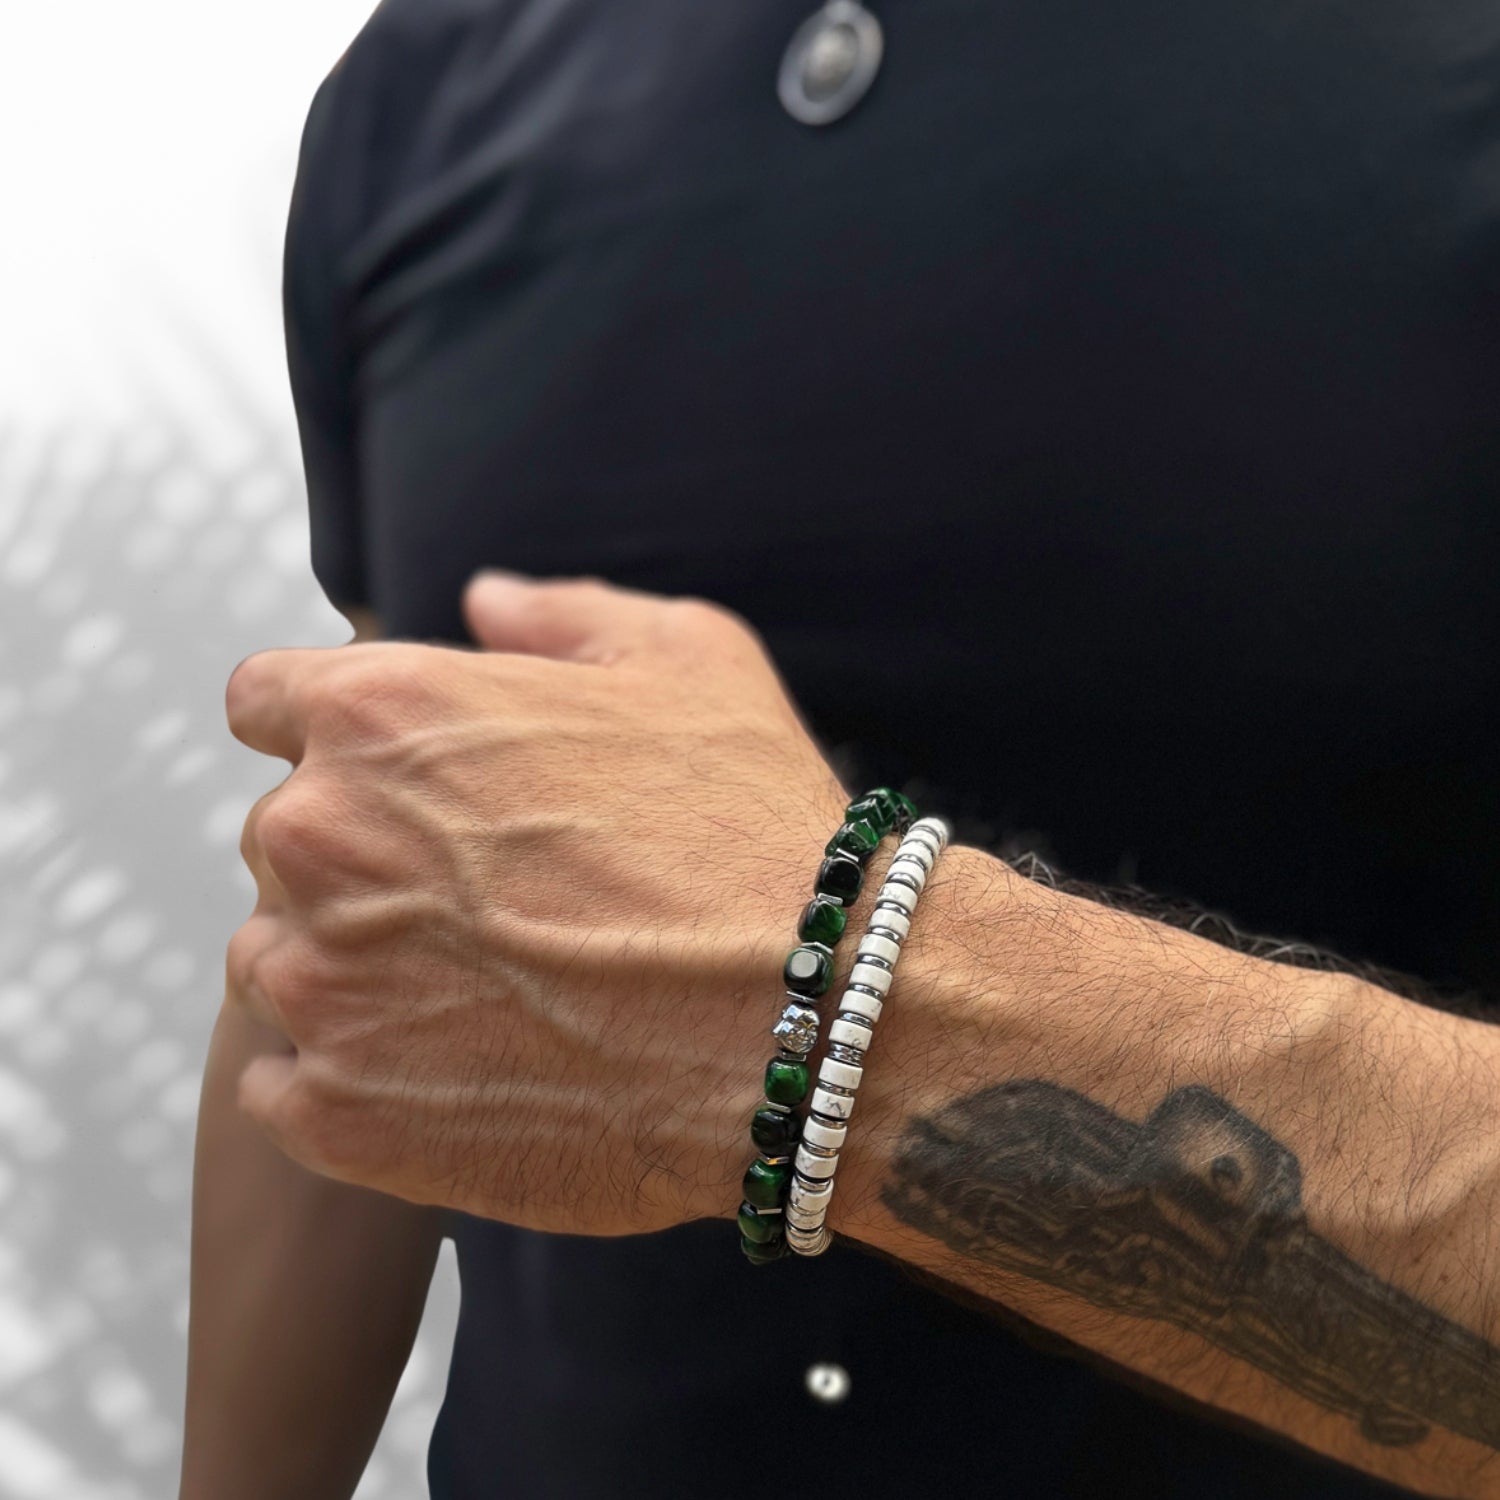 Men's Green Tiger's Eye Beaded Bracelet with a striking silver hematite Buddha charm symbolizing enlightenment